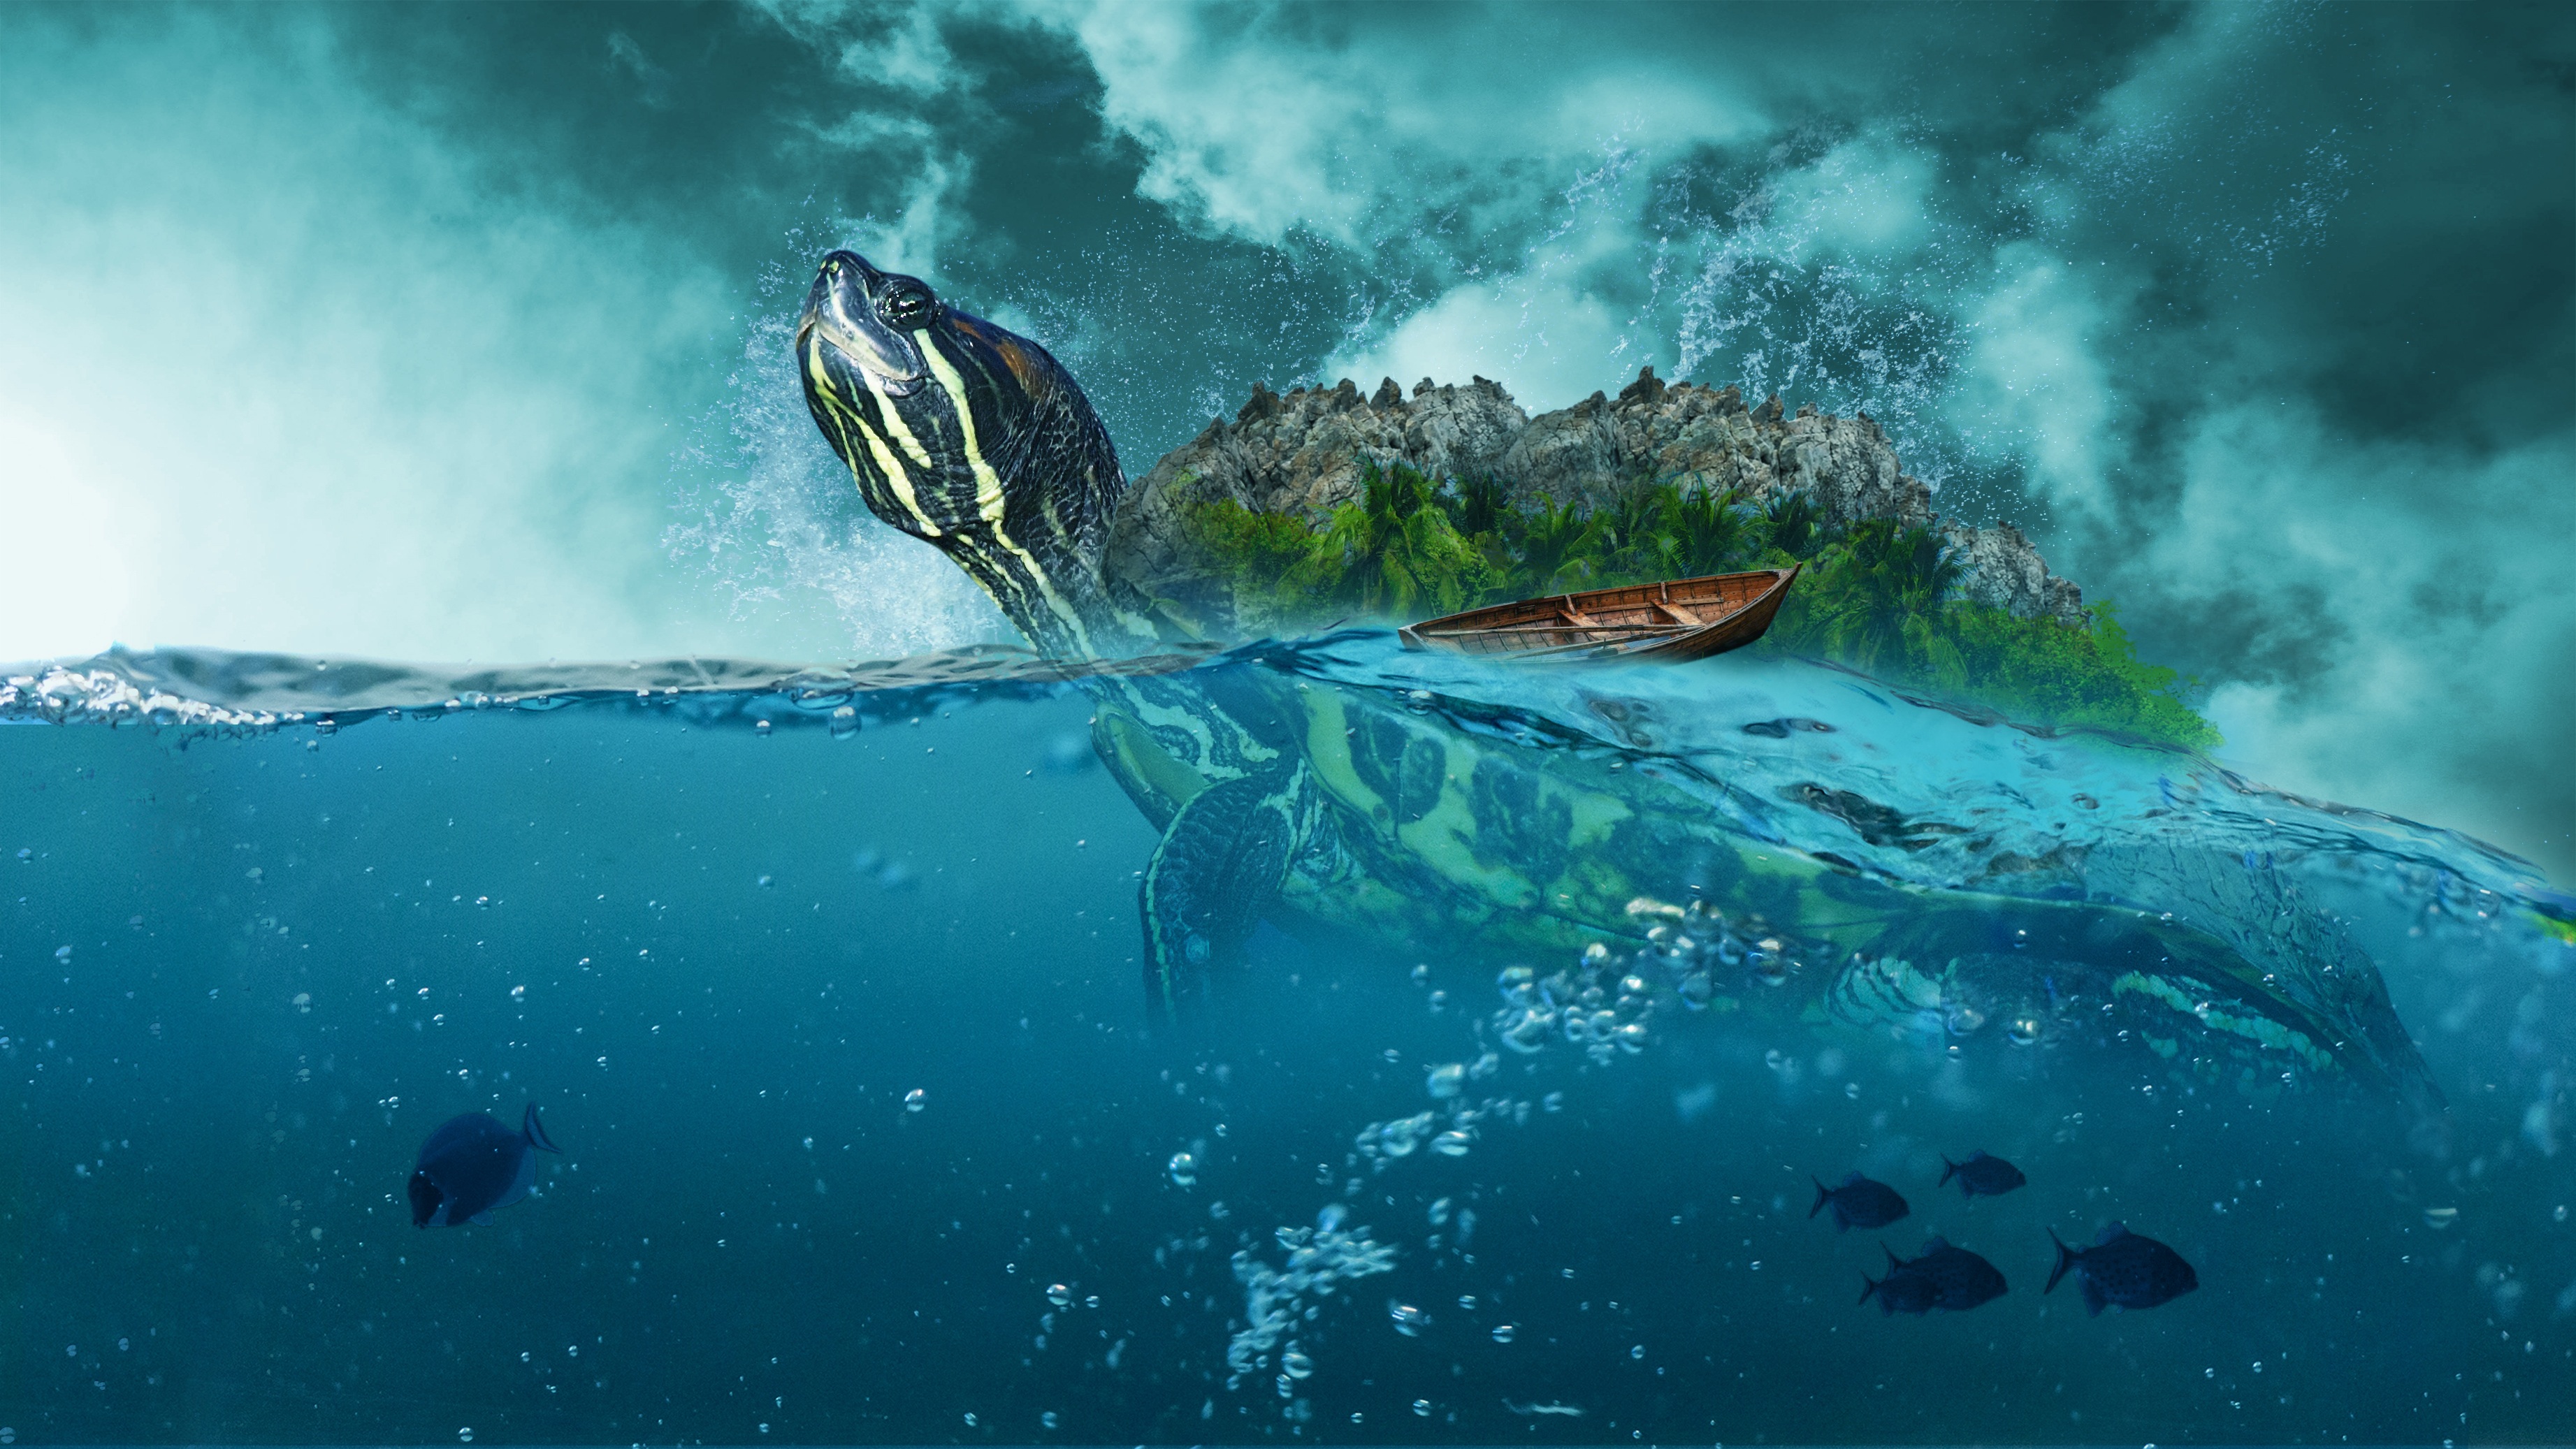 Boat Fantasy Island Turtle 3686x2074